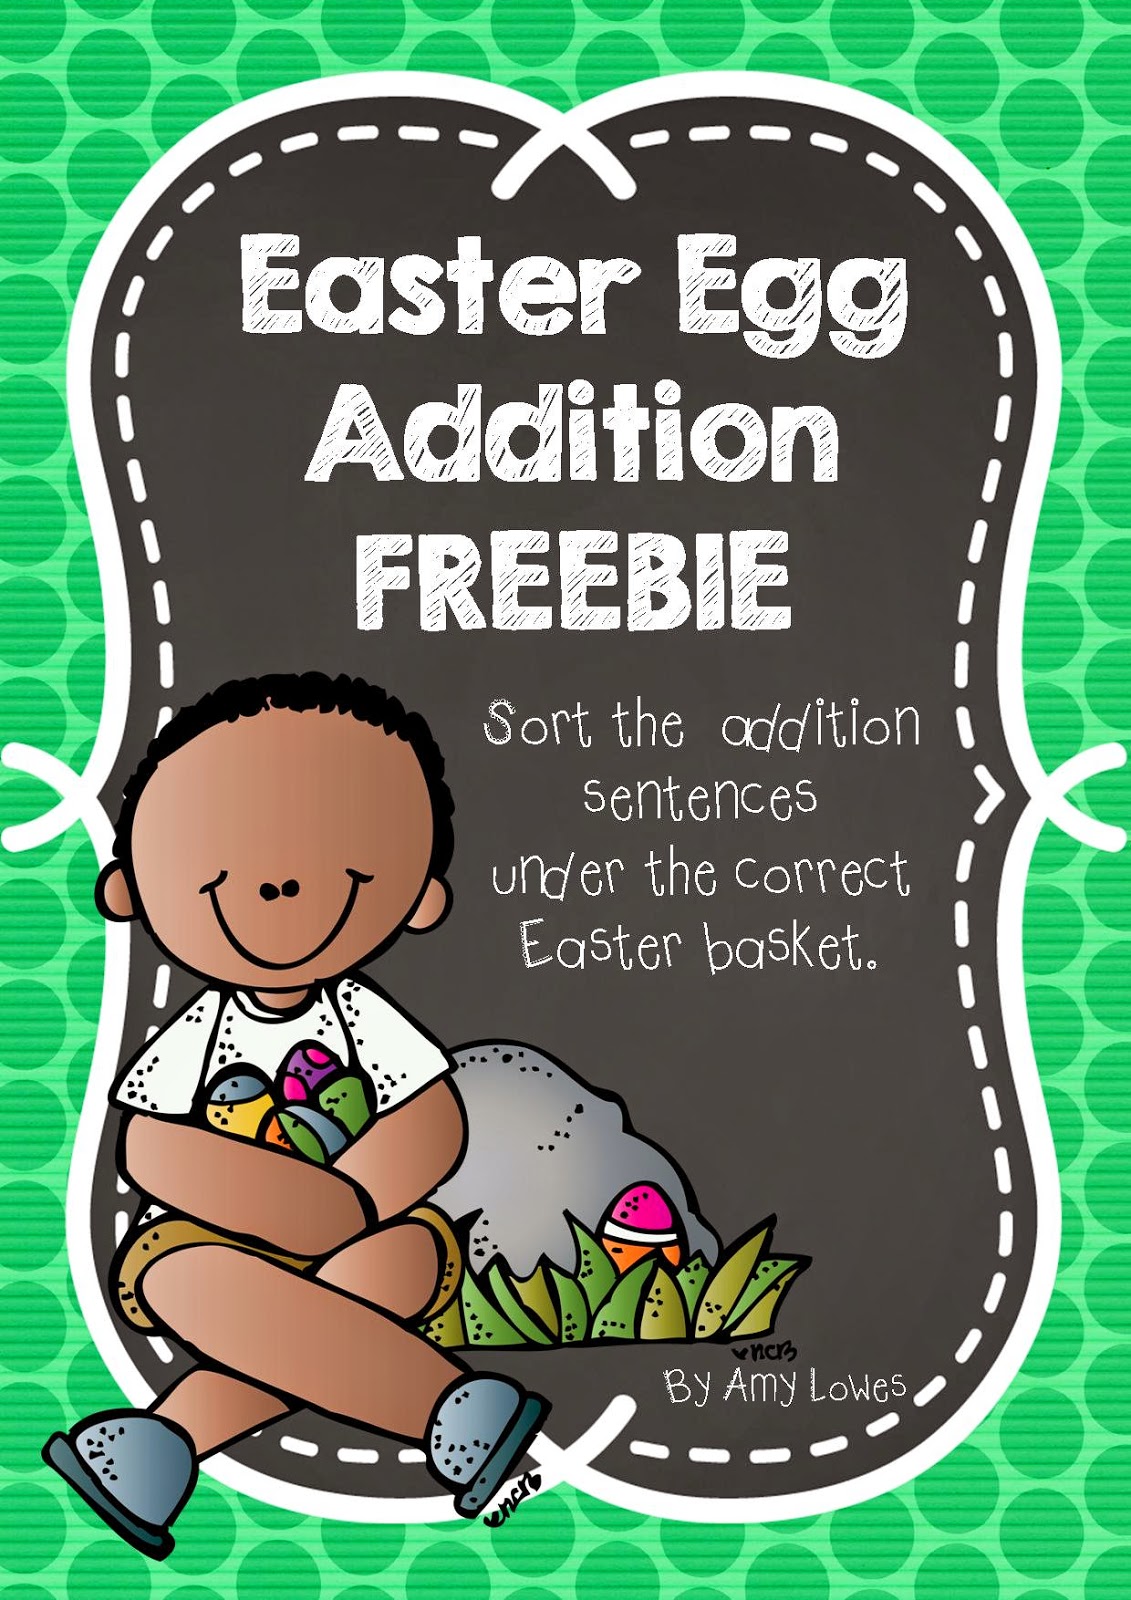 http://www.teacherspayteachers.com/Product/Easter-Egg-Addition-FREEBIE-1197604